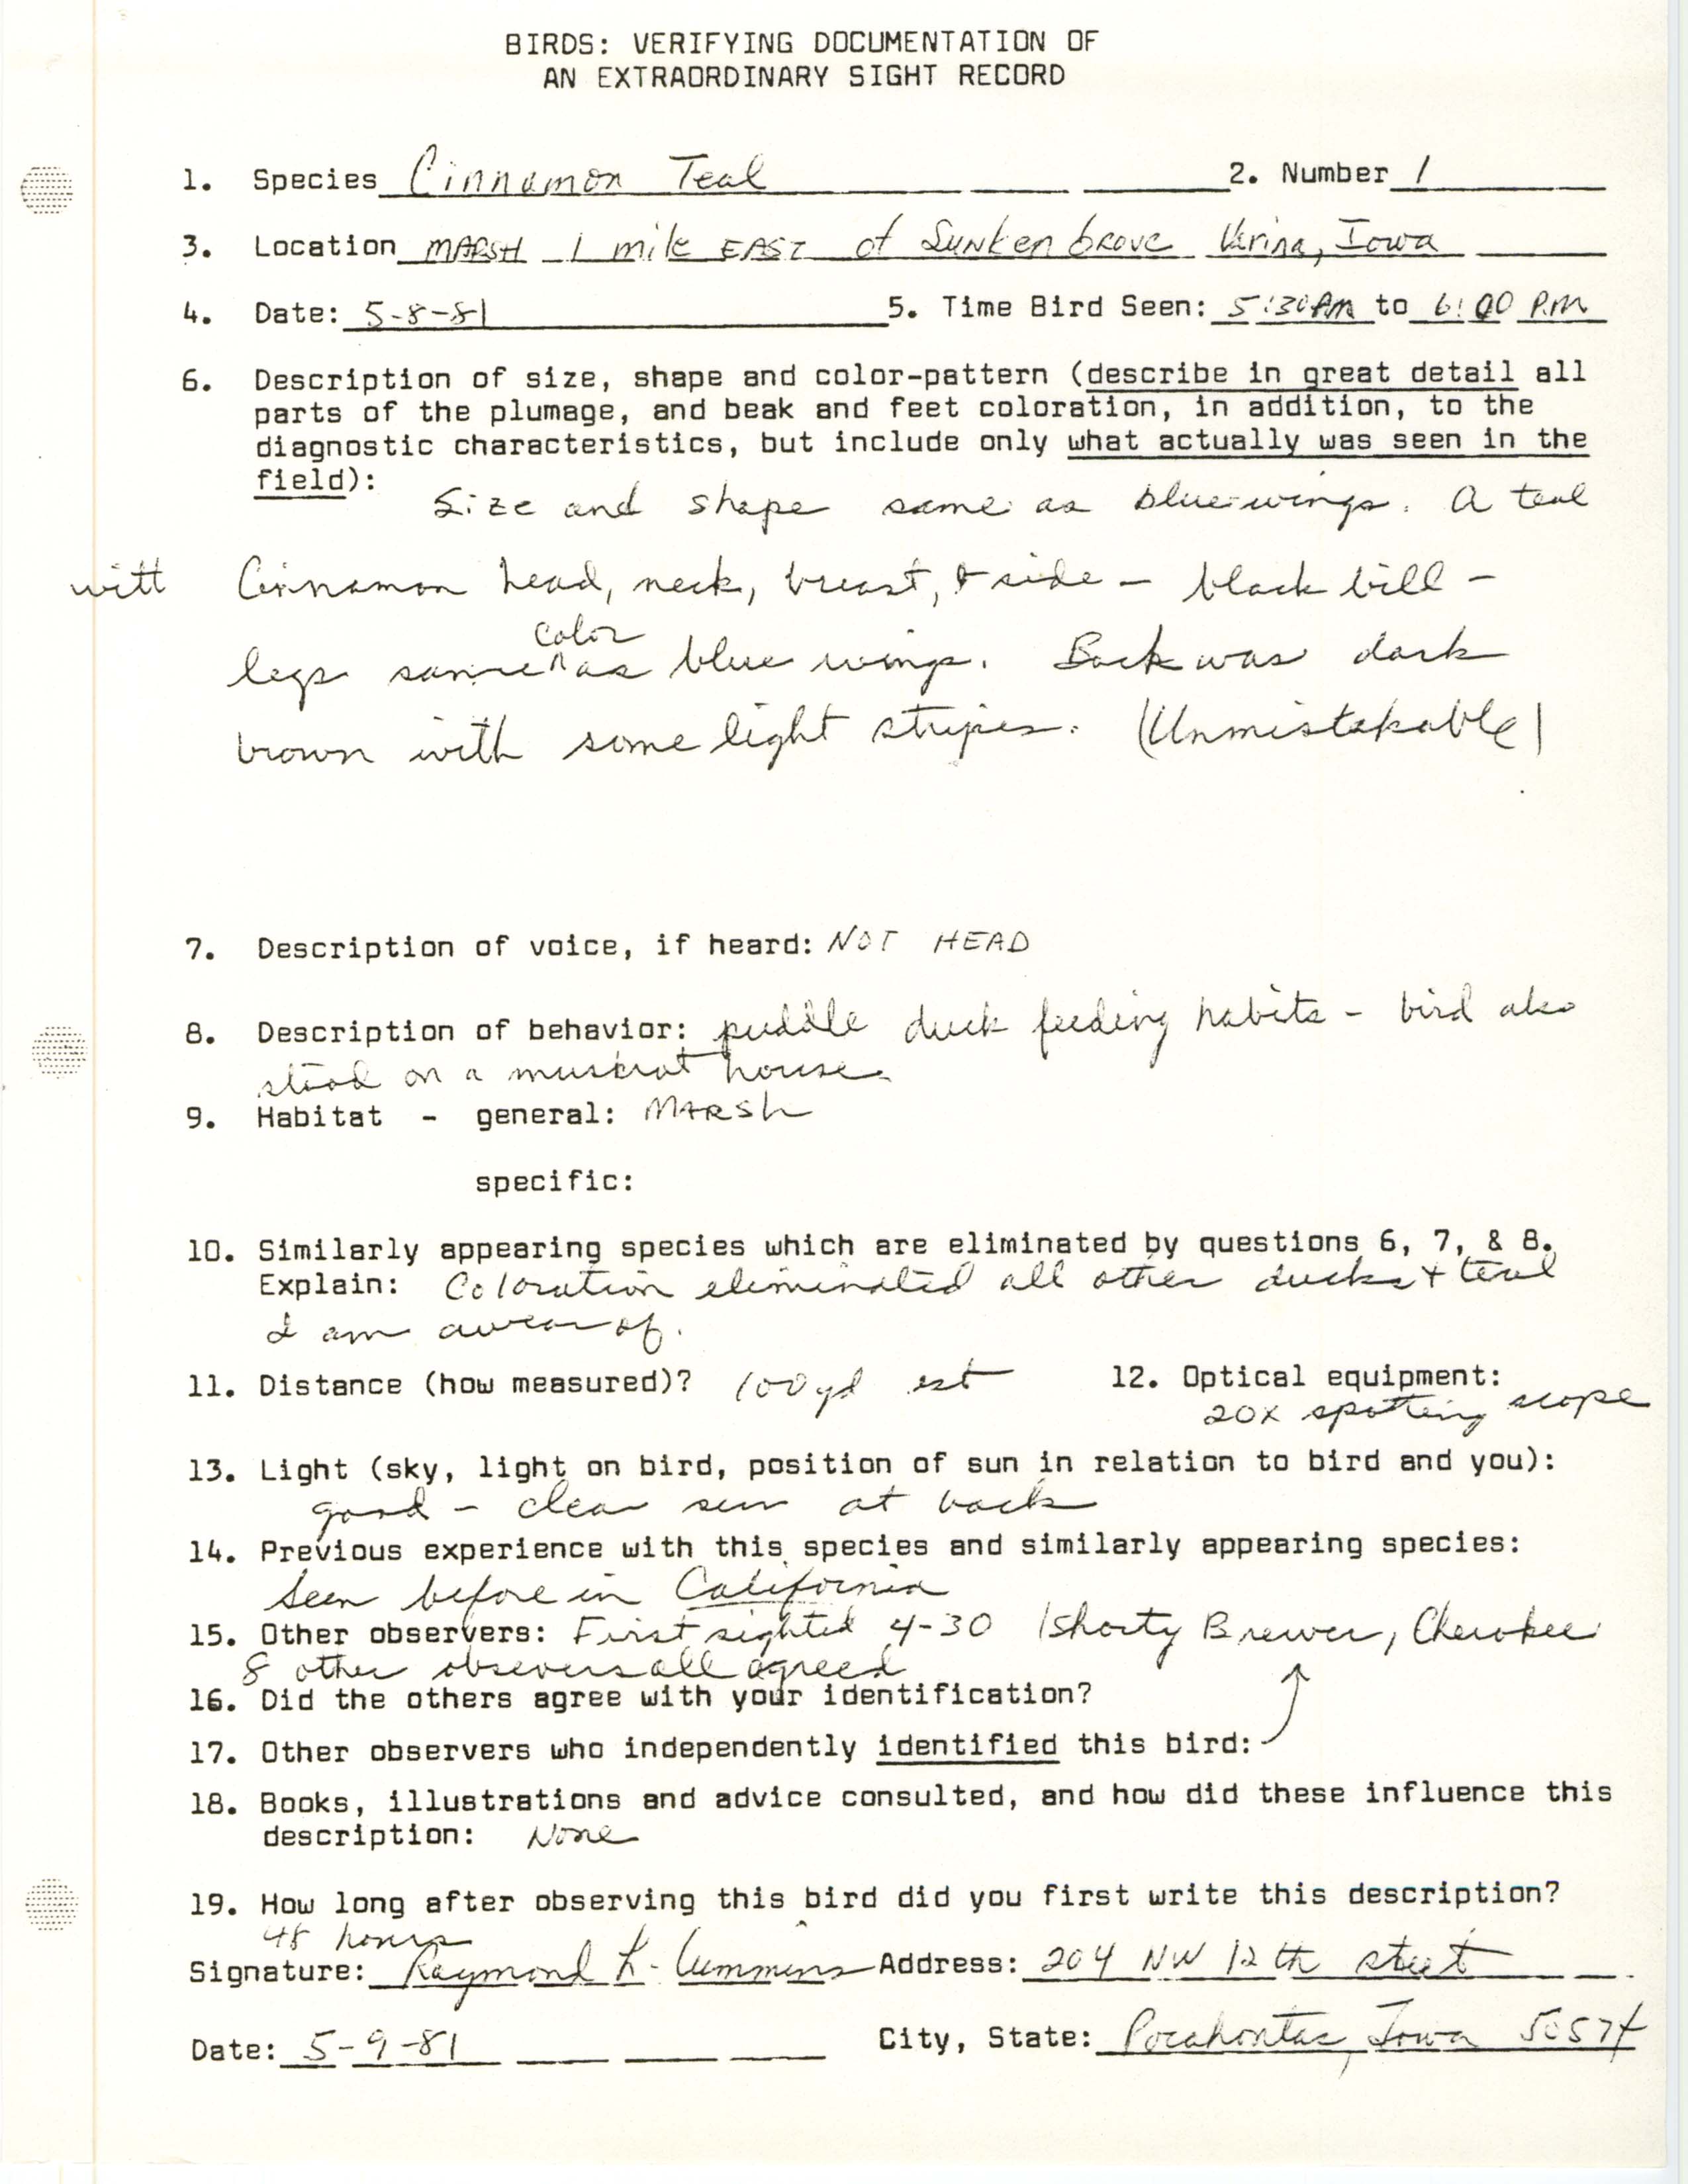 Rare bird documentation form for Cinnamon Teal at Sunken Grove, 1981